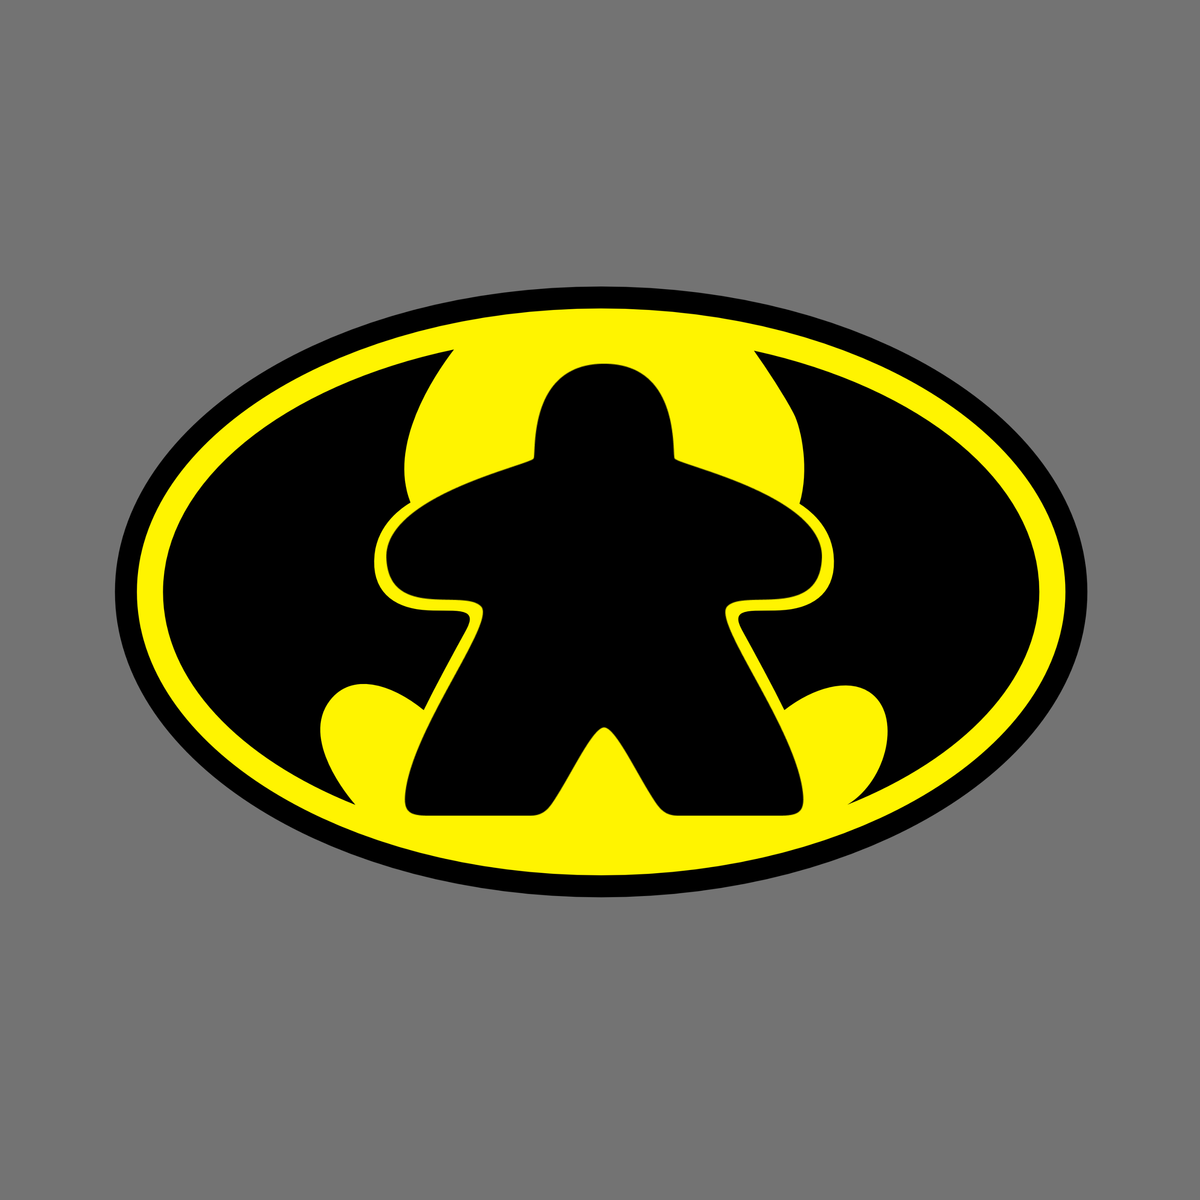 BatMeeple Symbol Board Game T-Shirt